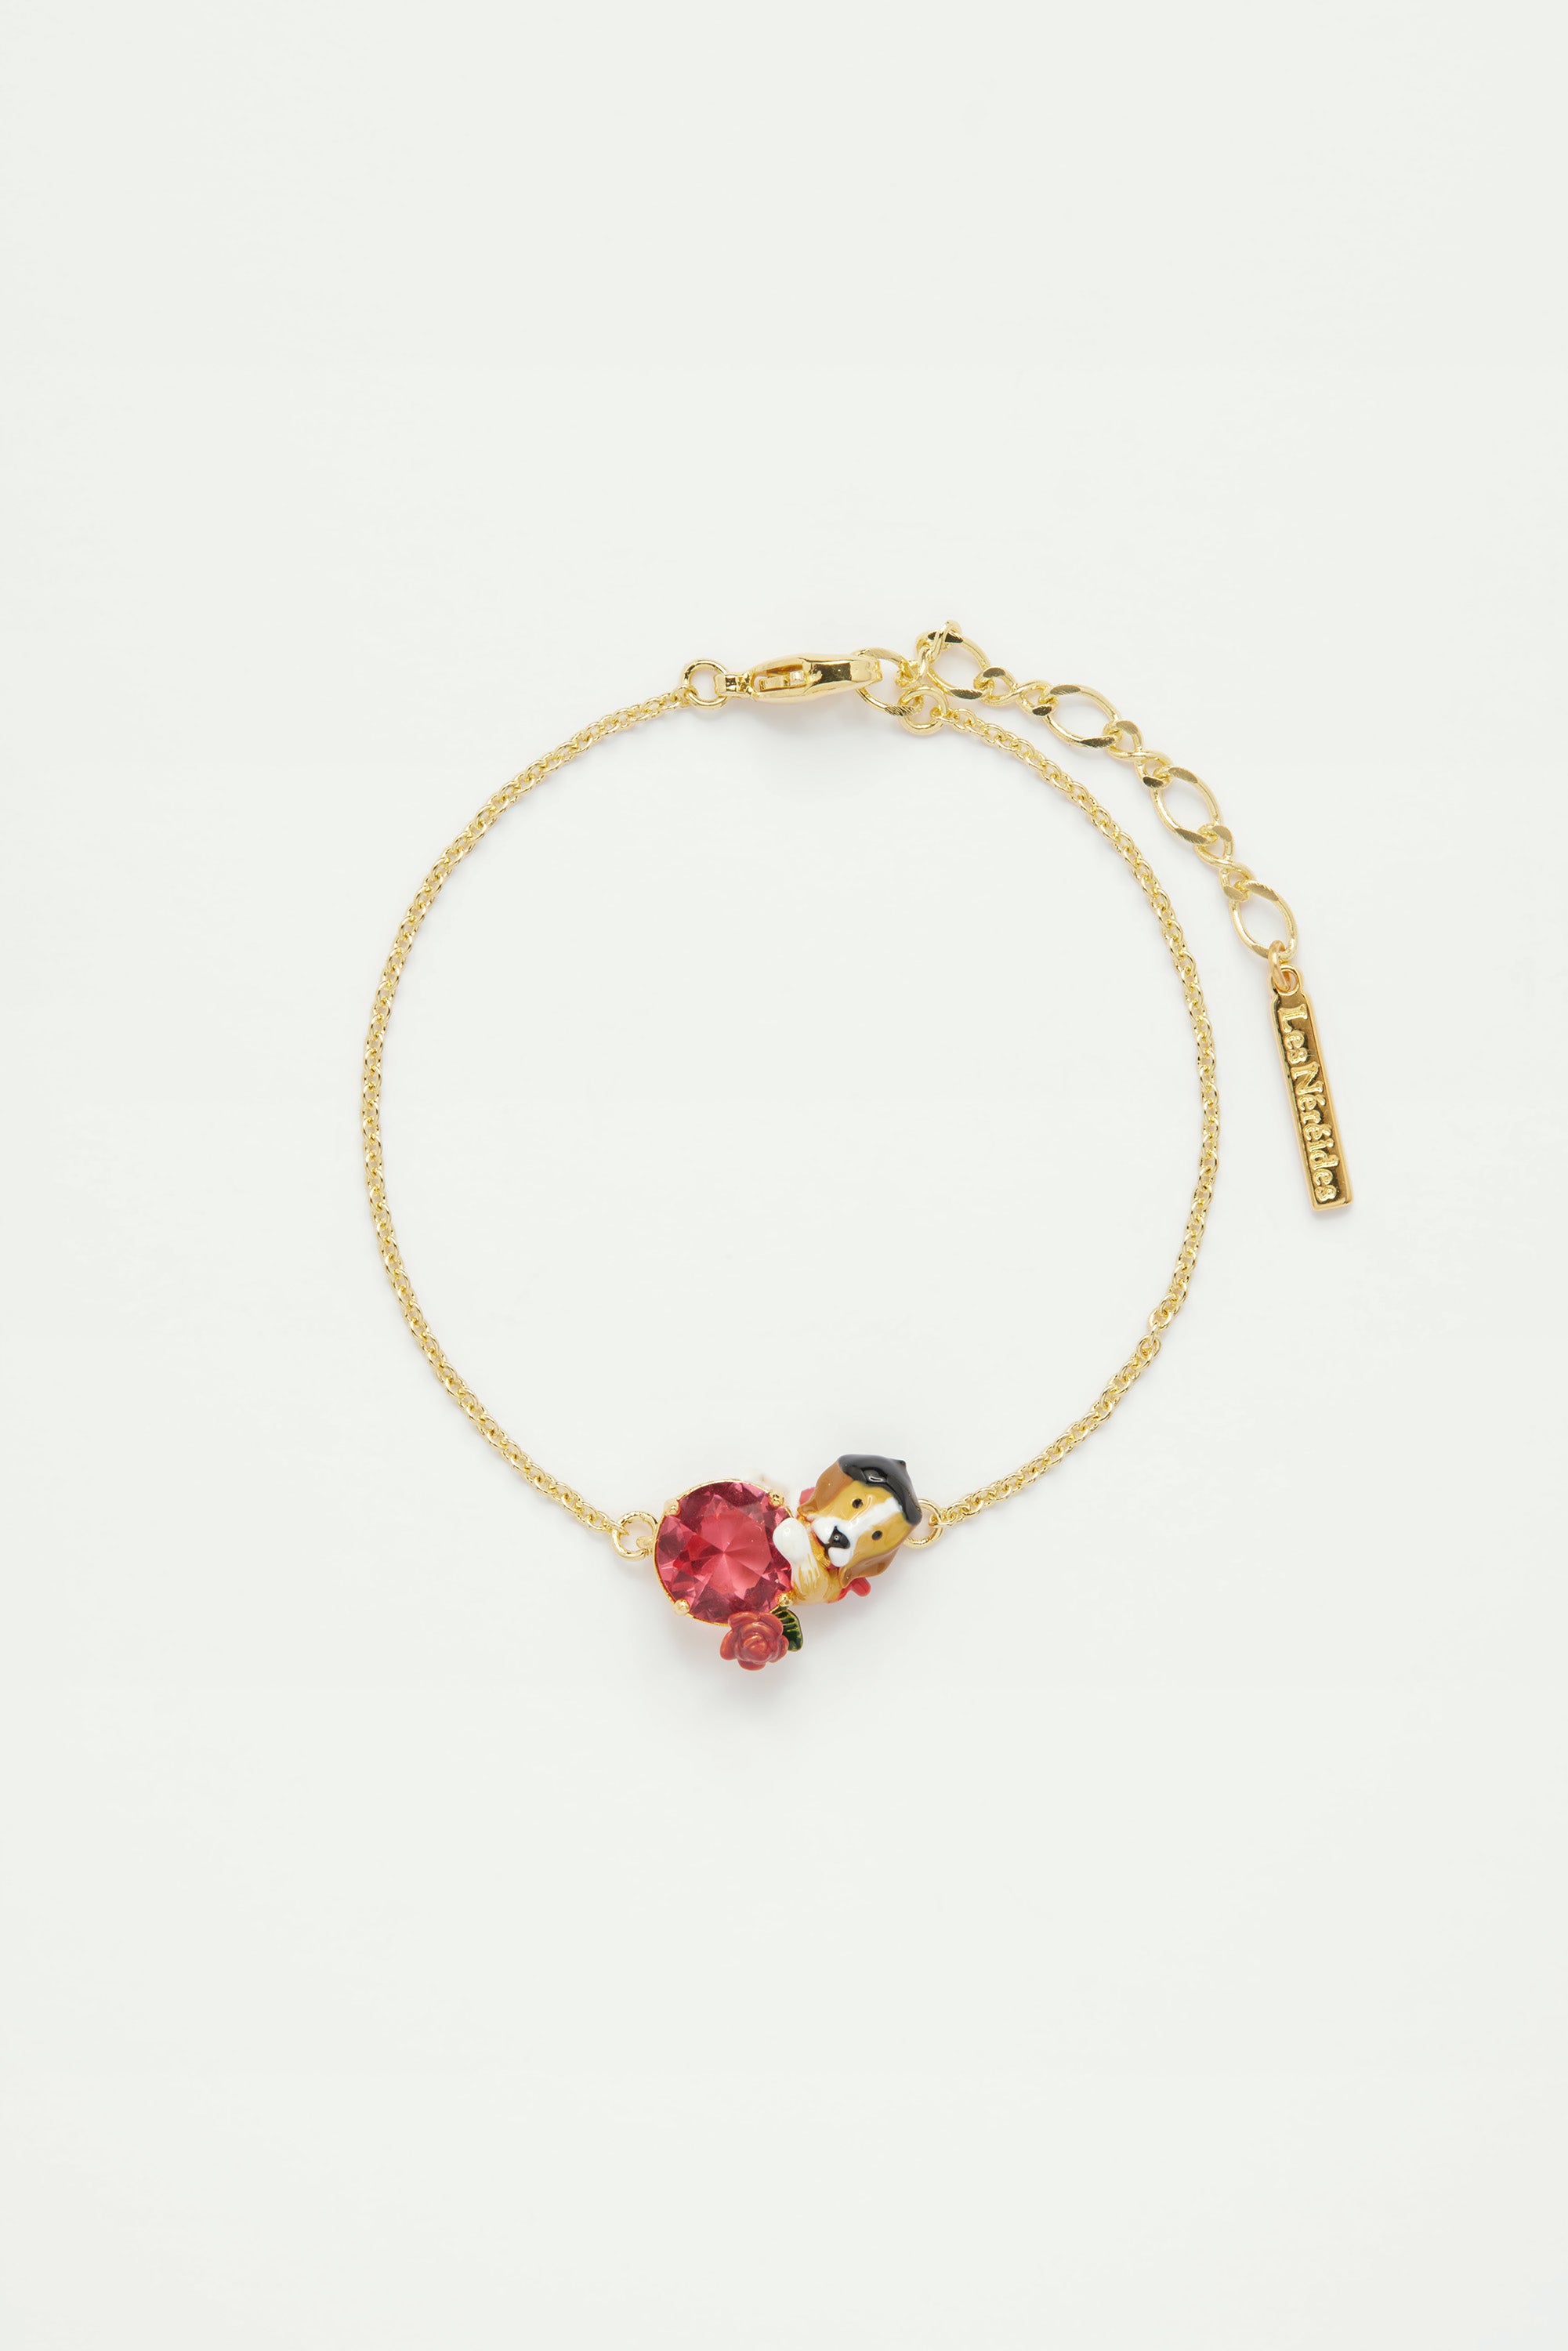 Beagle and pink cut glass stone fine bracelet